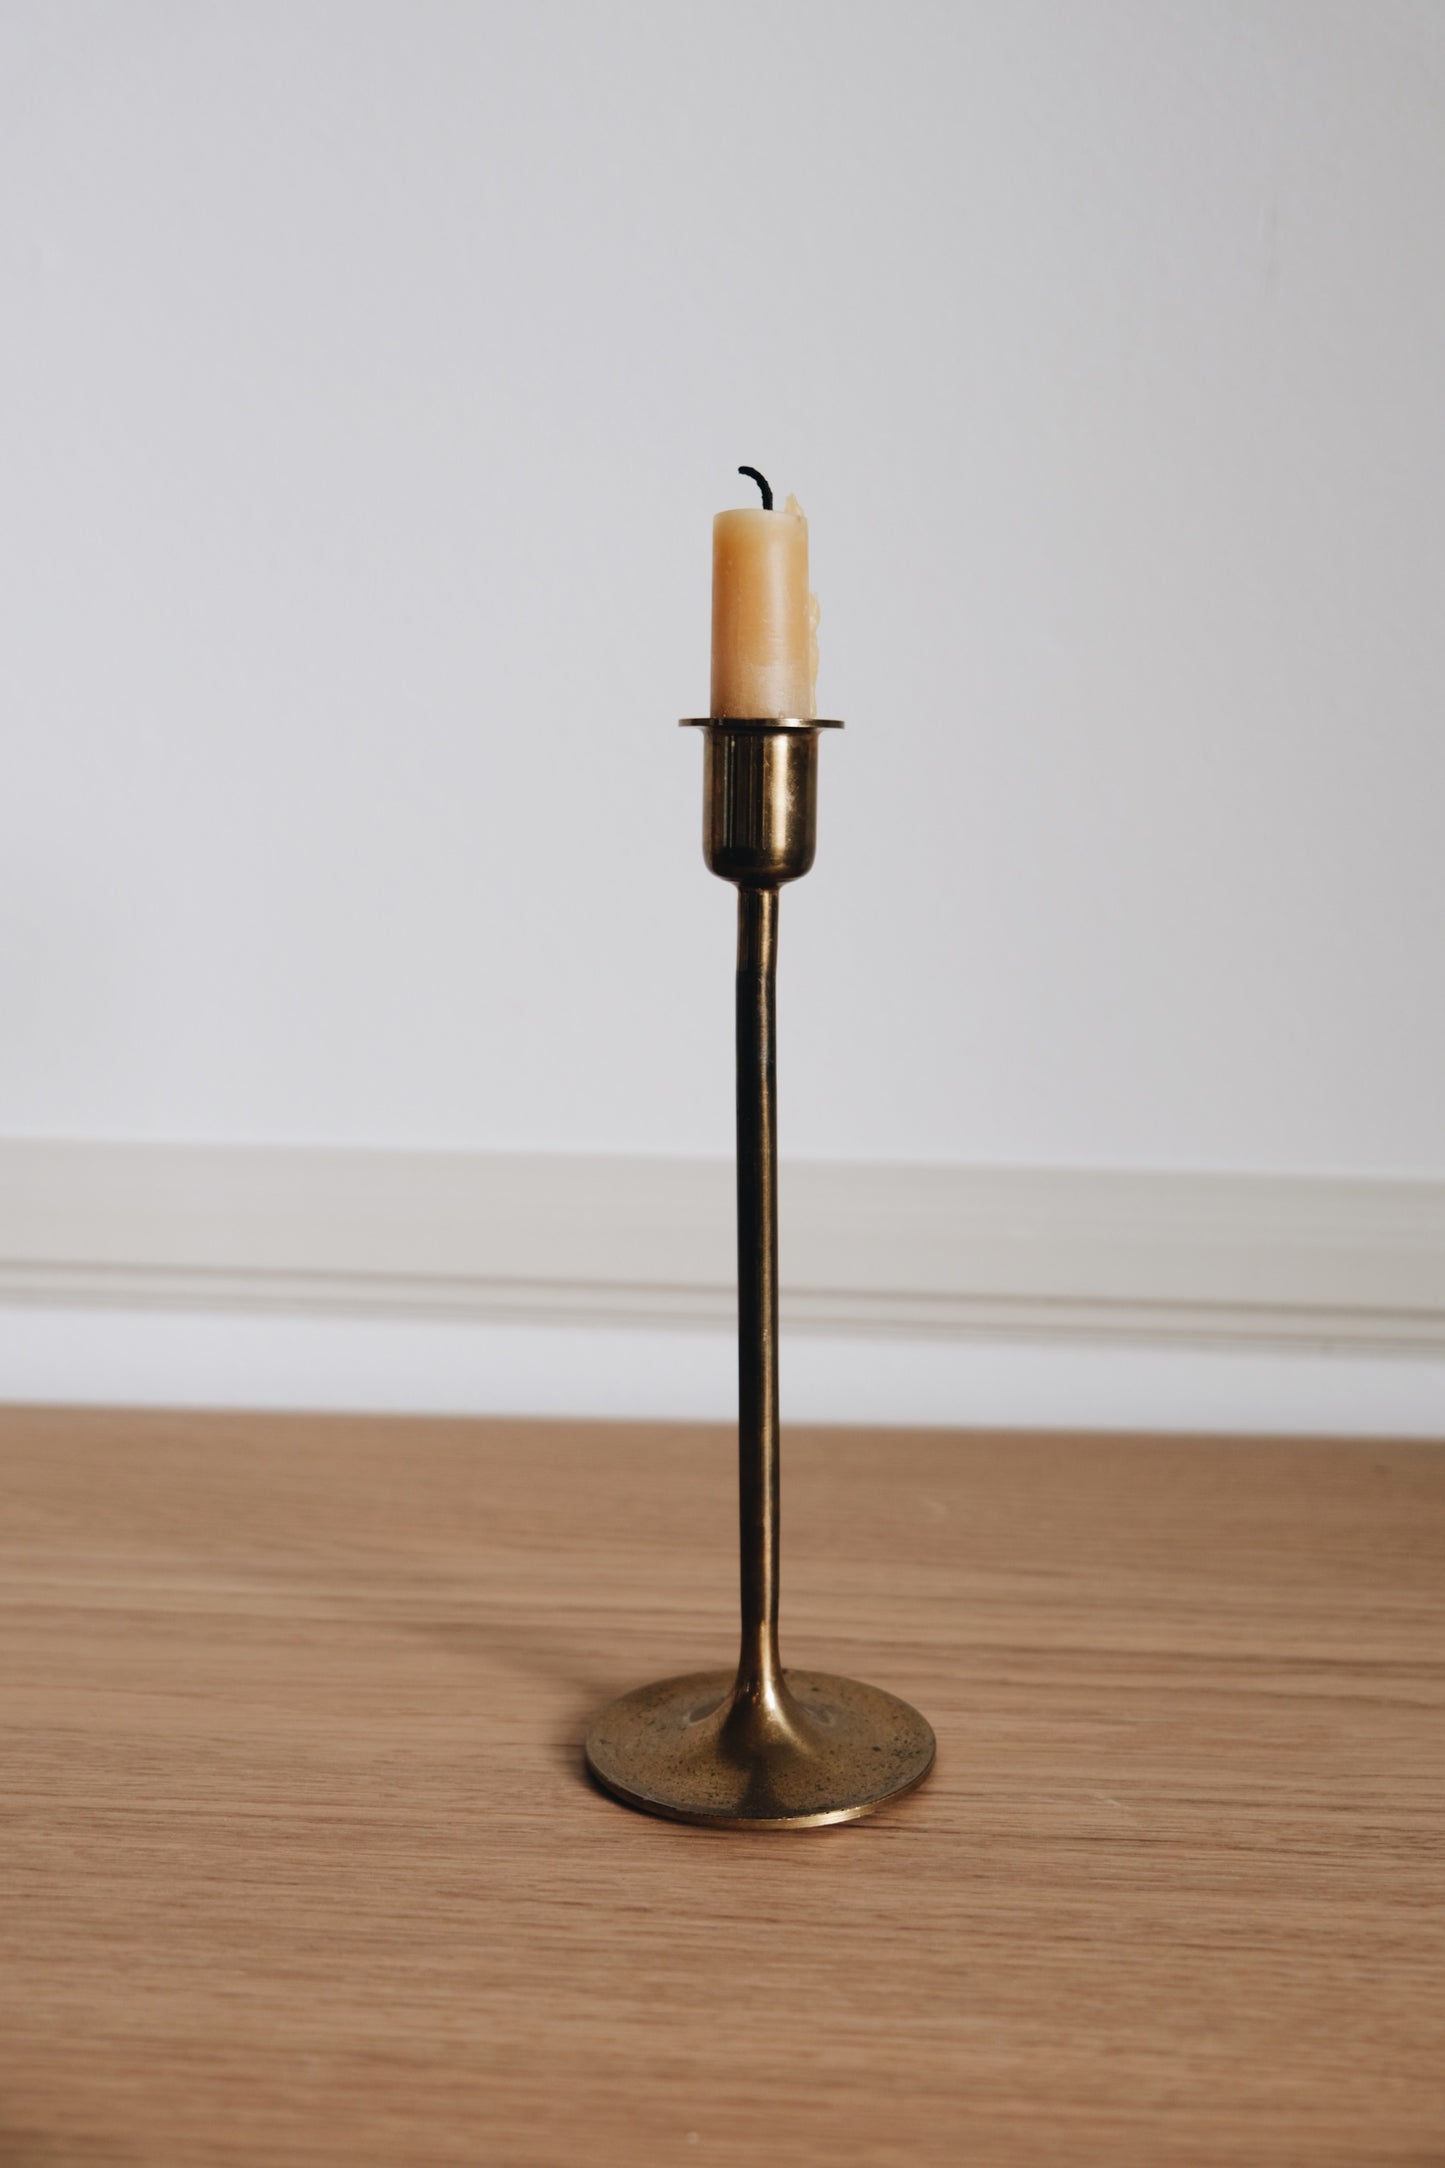 Vintage Brass Candlestick